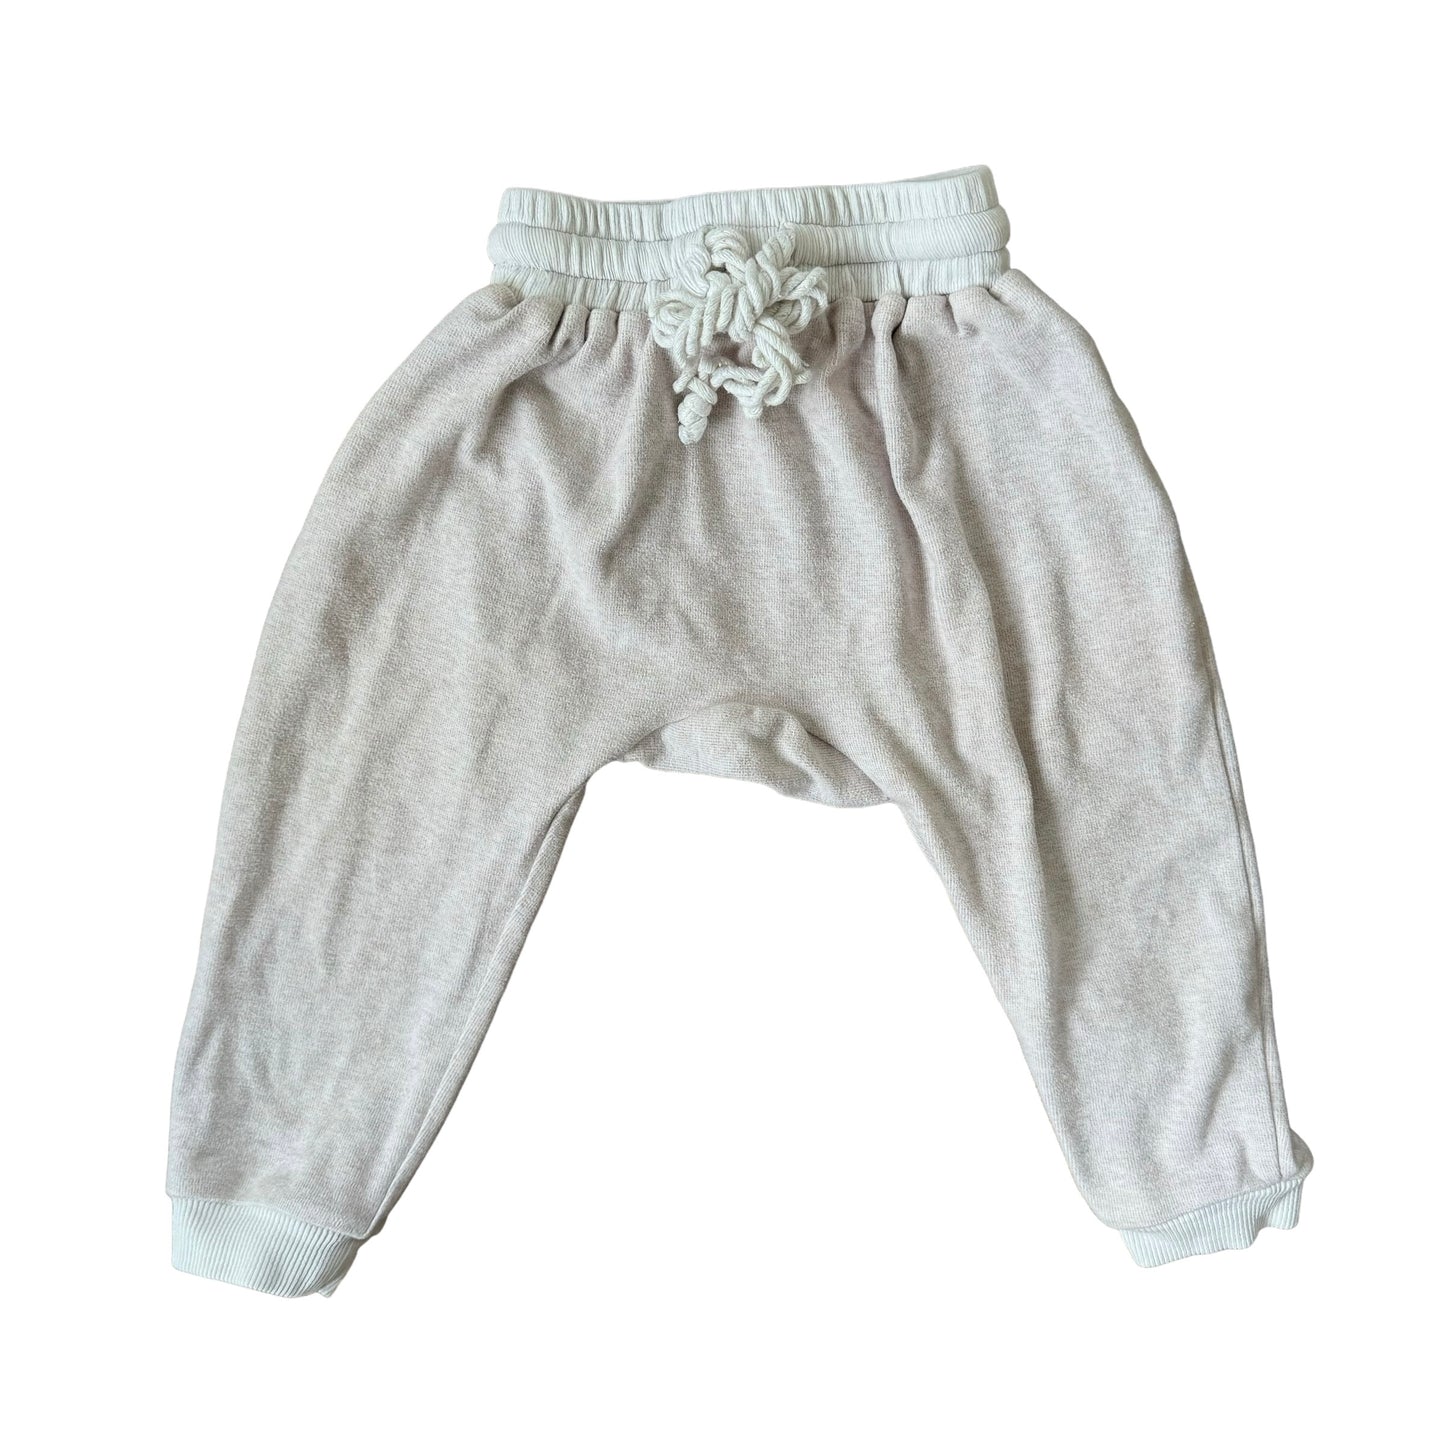 Koa Pants | Size: 2 years | GUC